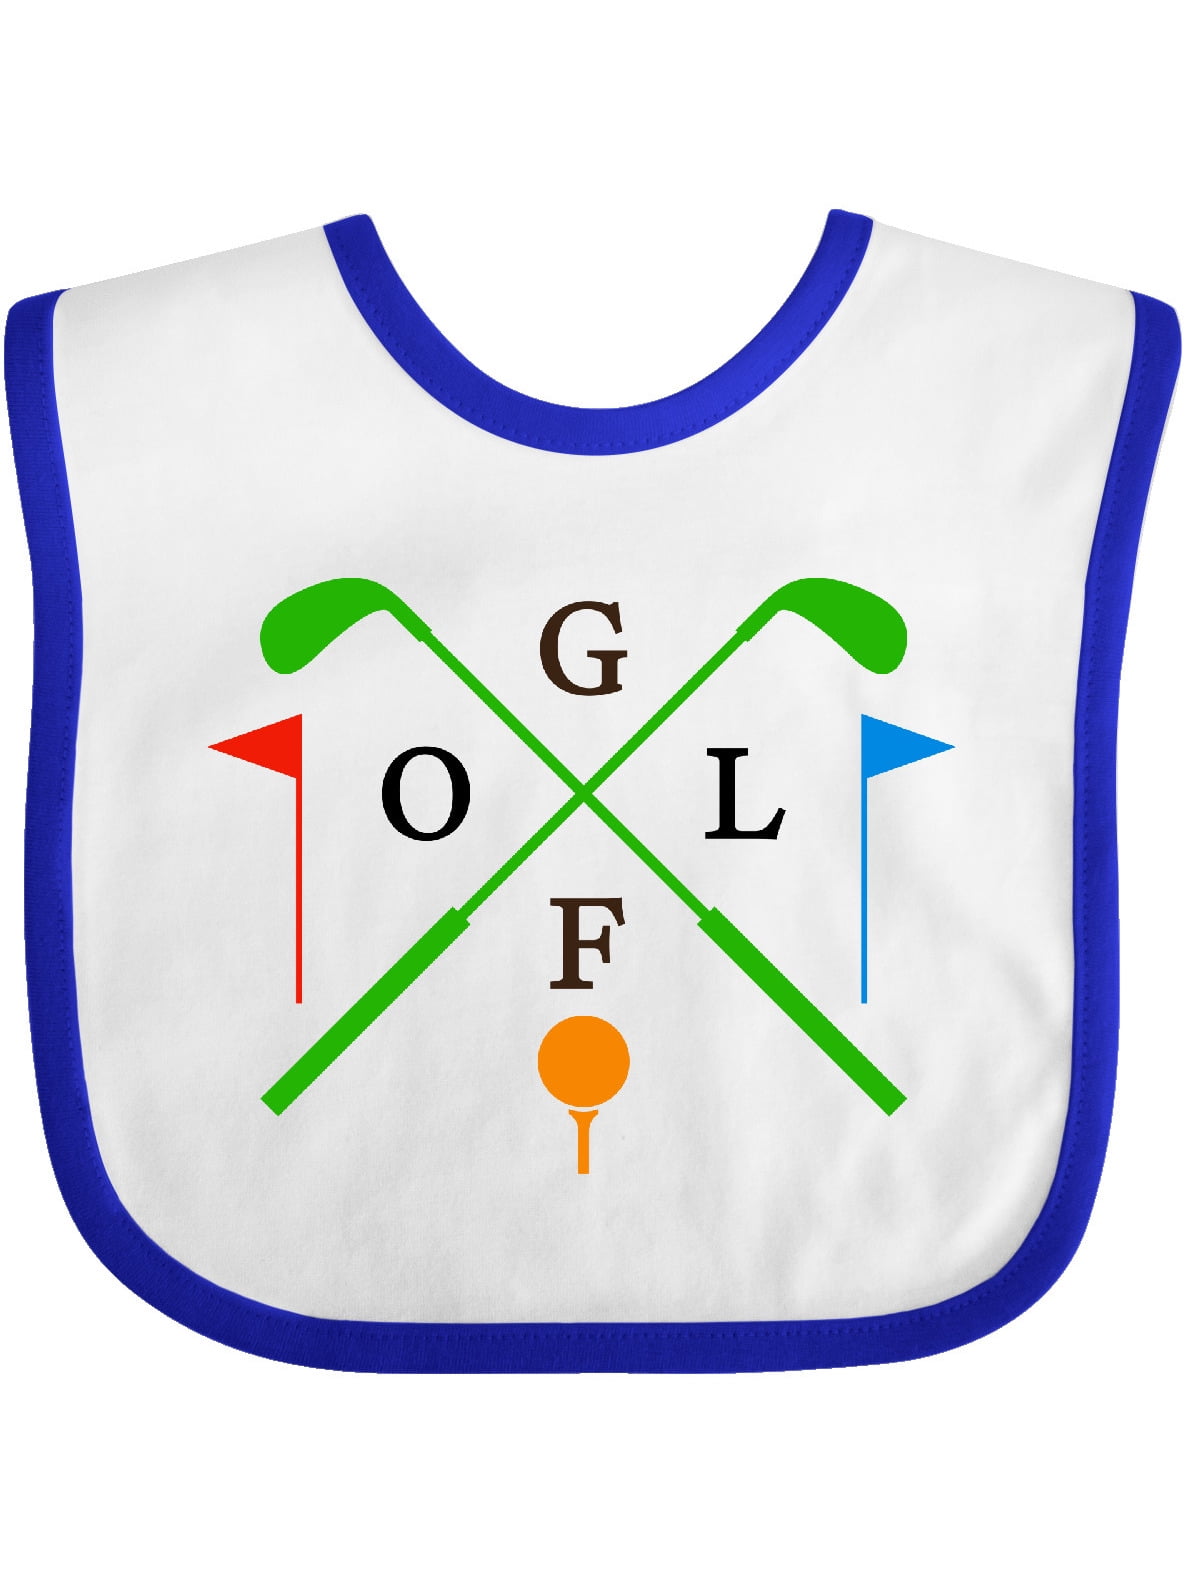 Golf gifts for children